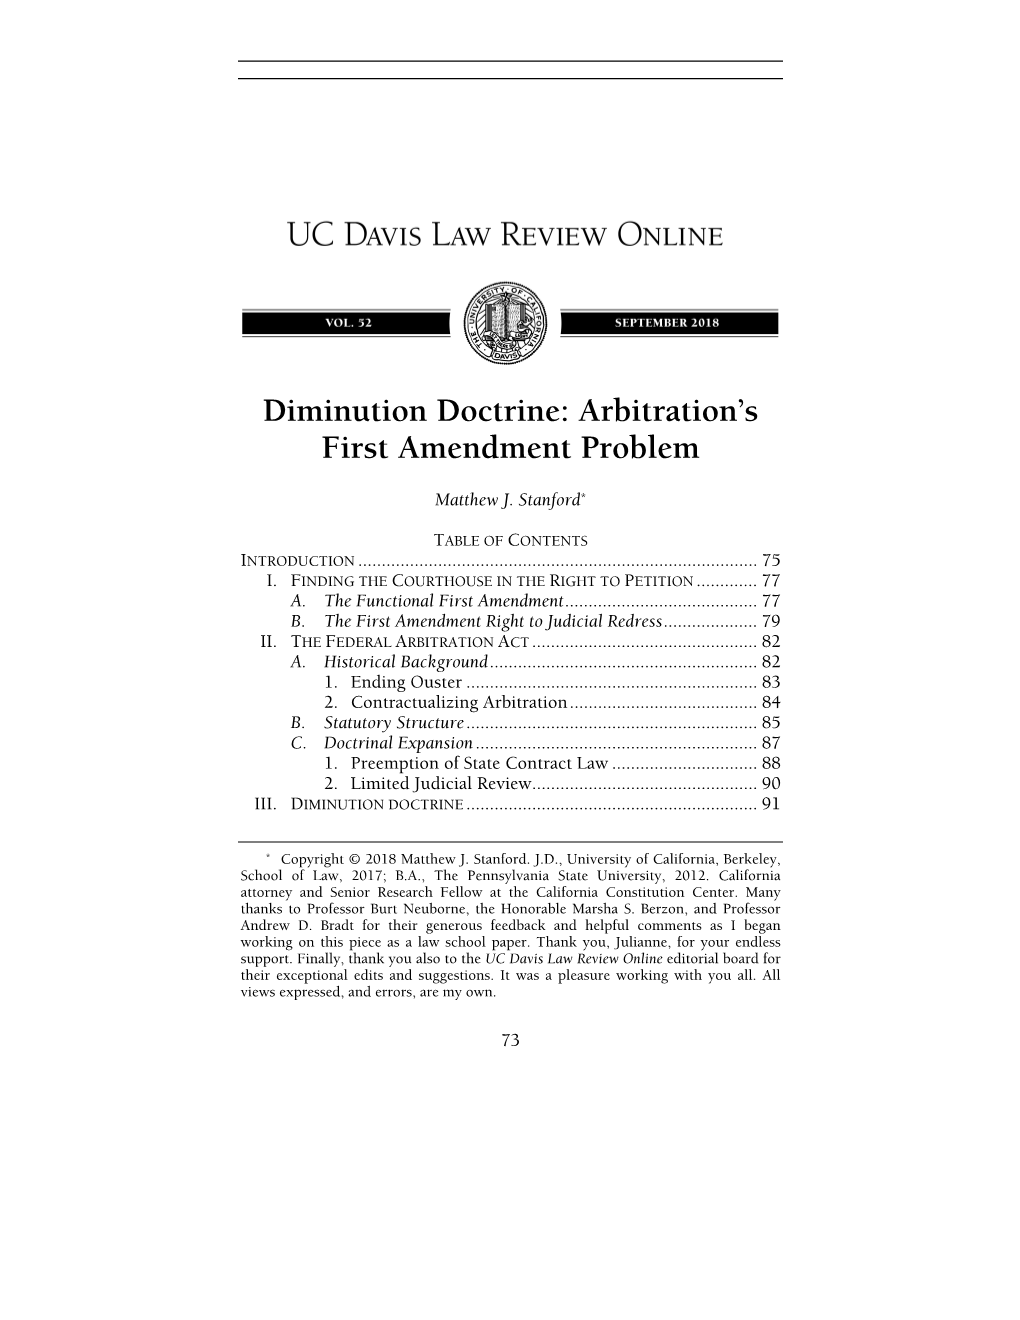 Diminution Doctrine: Arbitration's First Amendment Problem